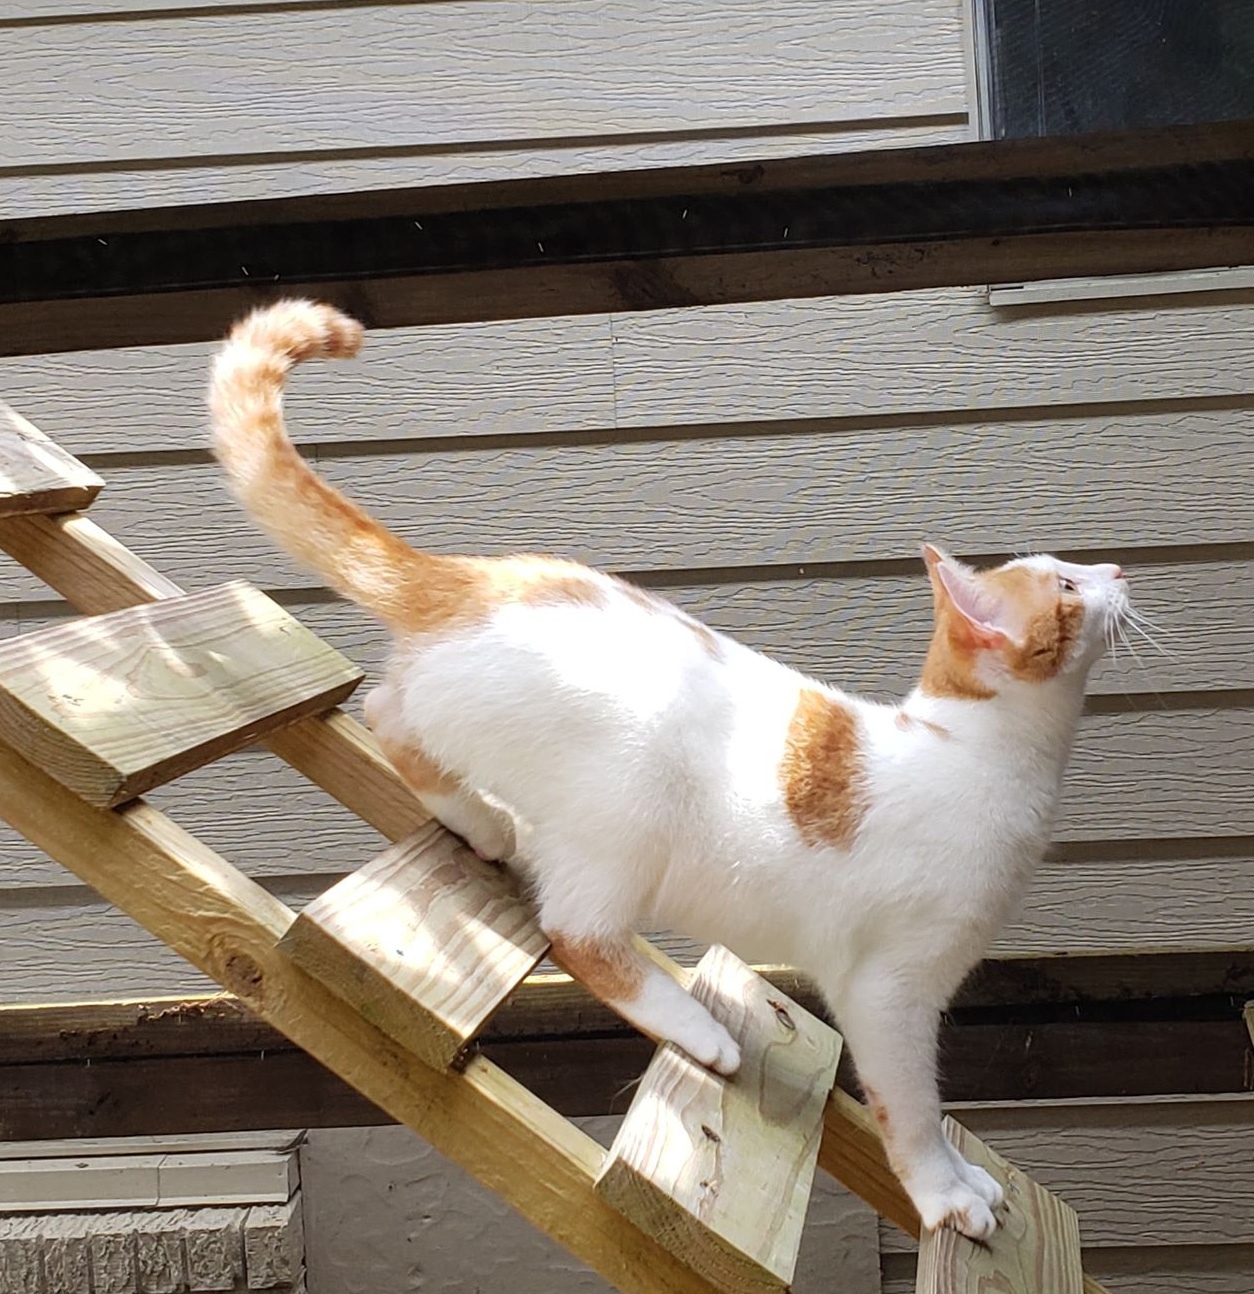 CATS Bridge To Rescue  Cat & Kitten Pet Adoptions